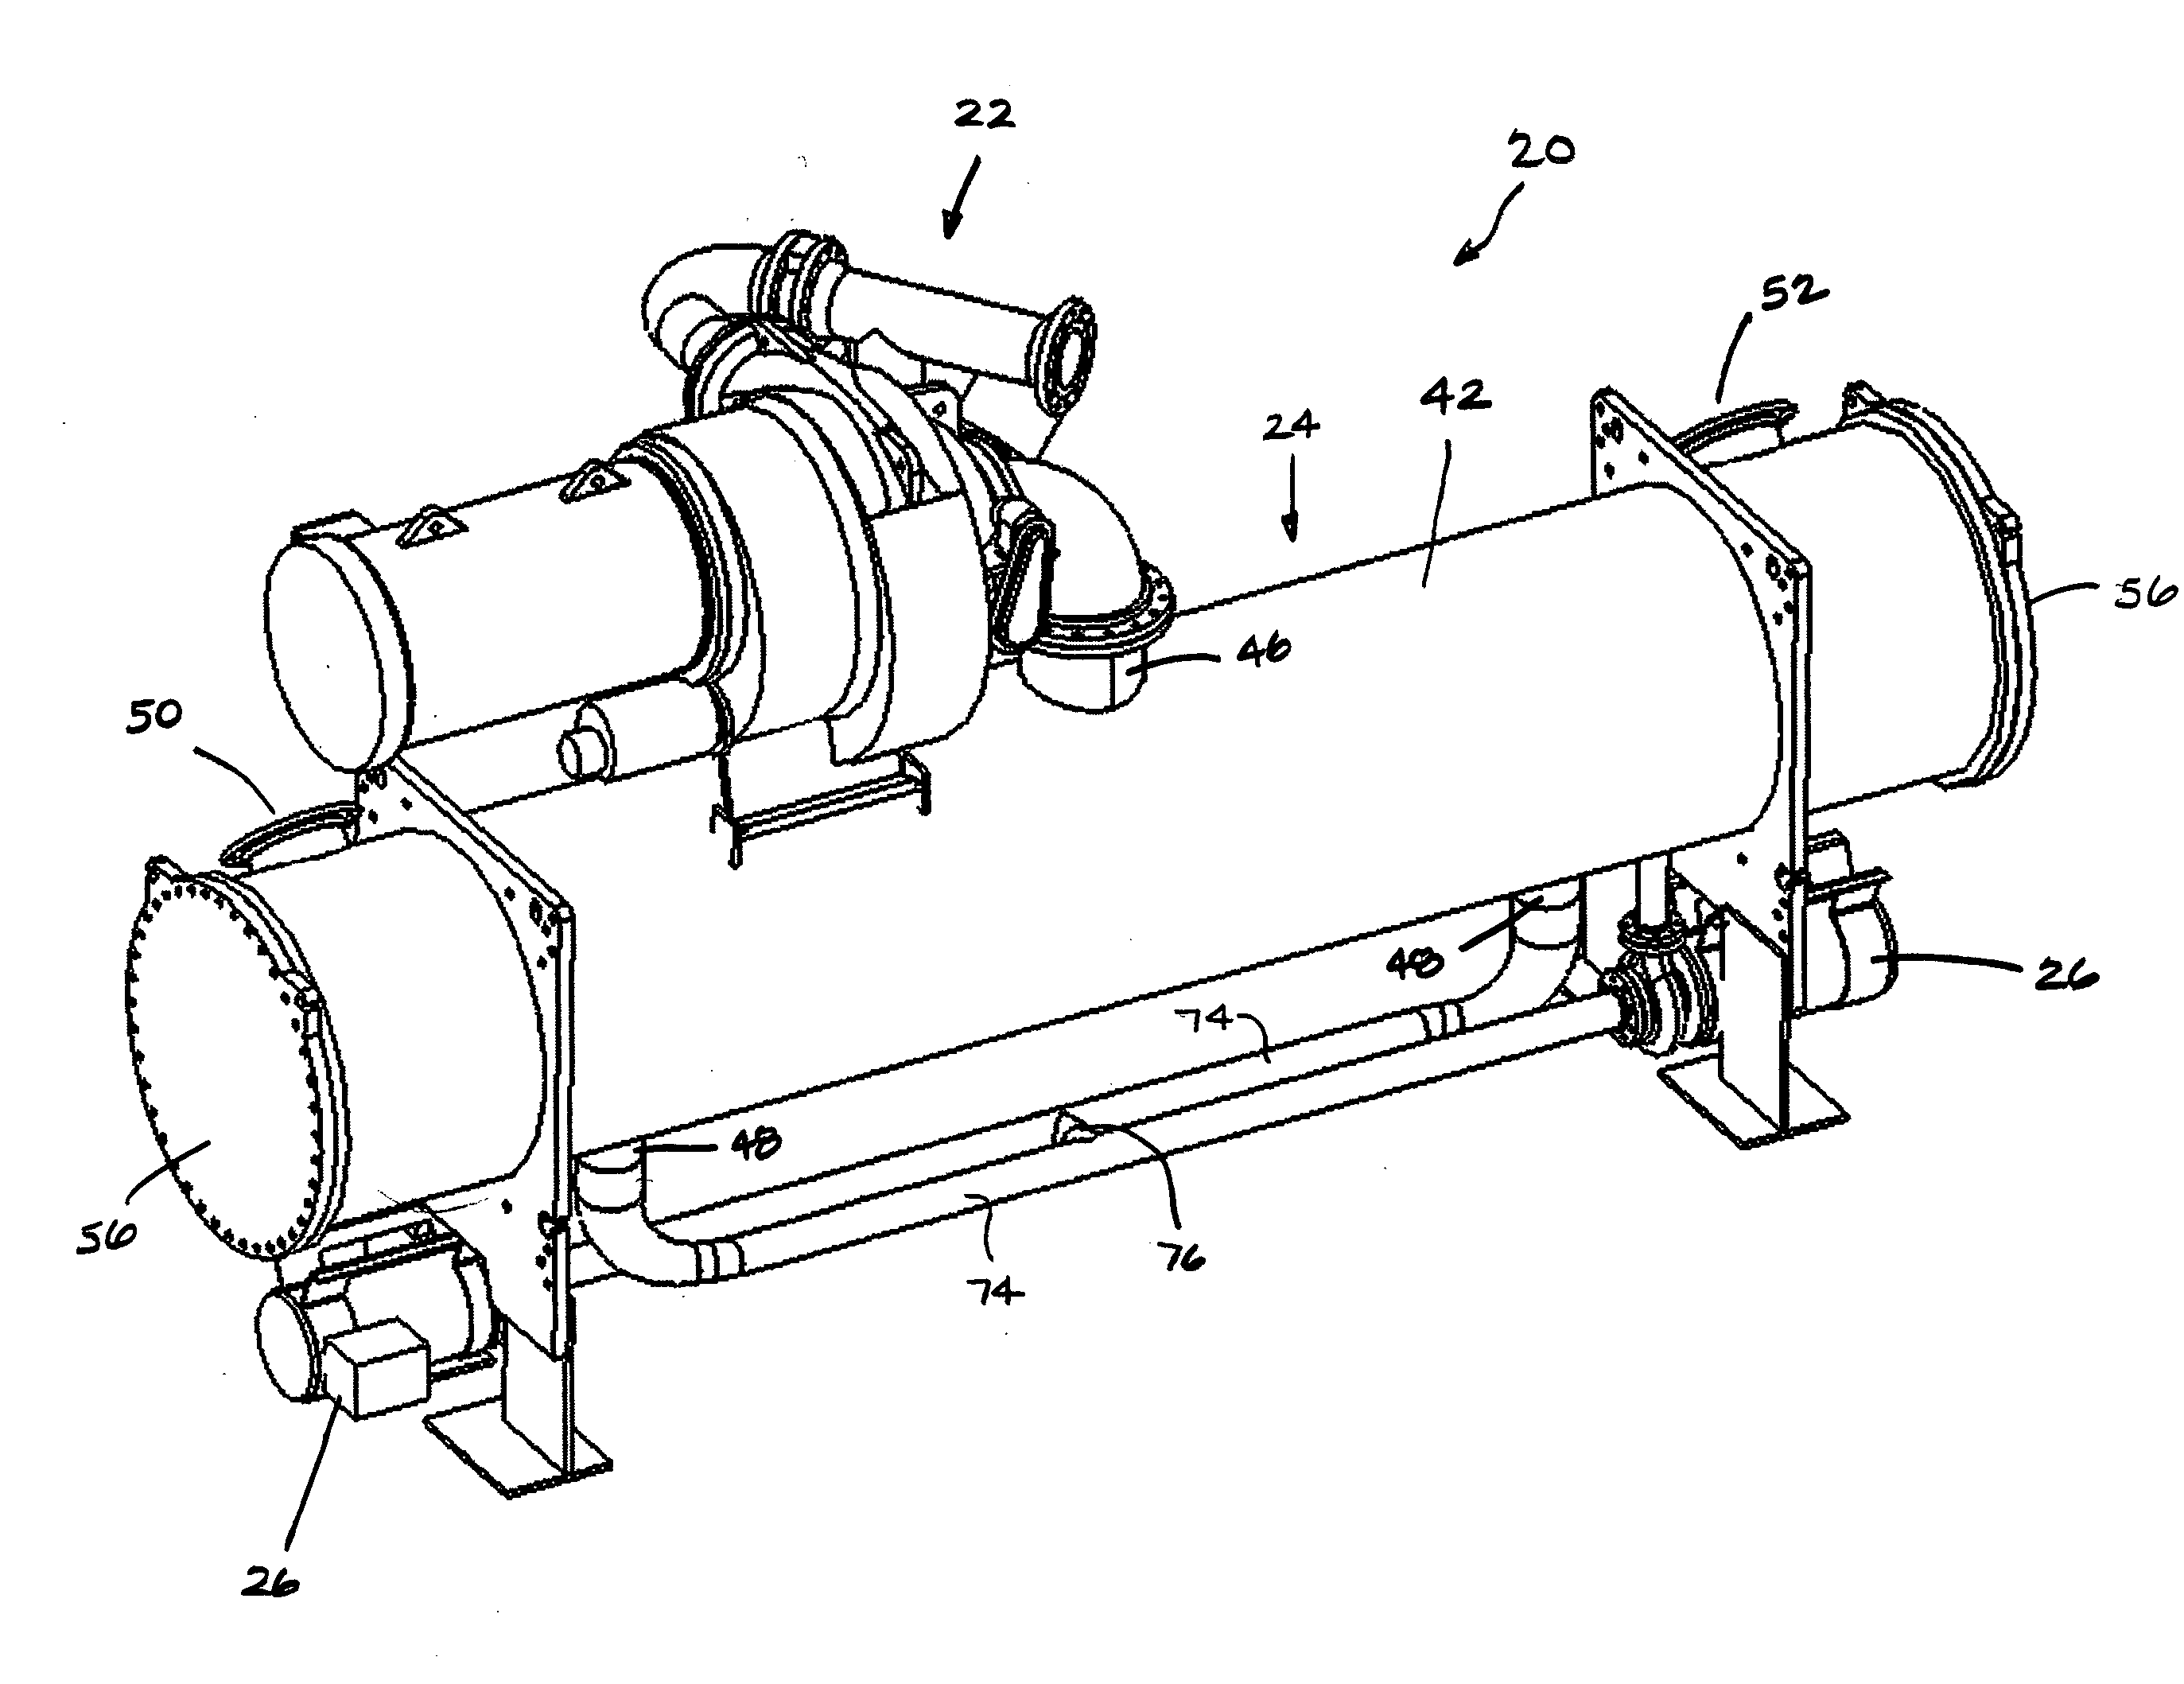 Rankine cycle device having multiple turbo-generators